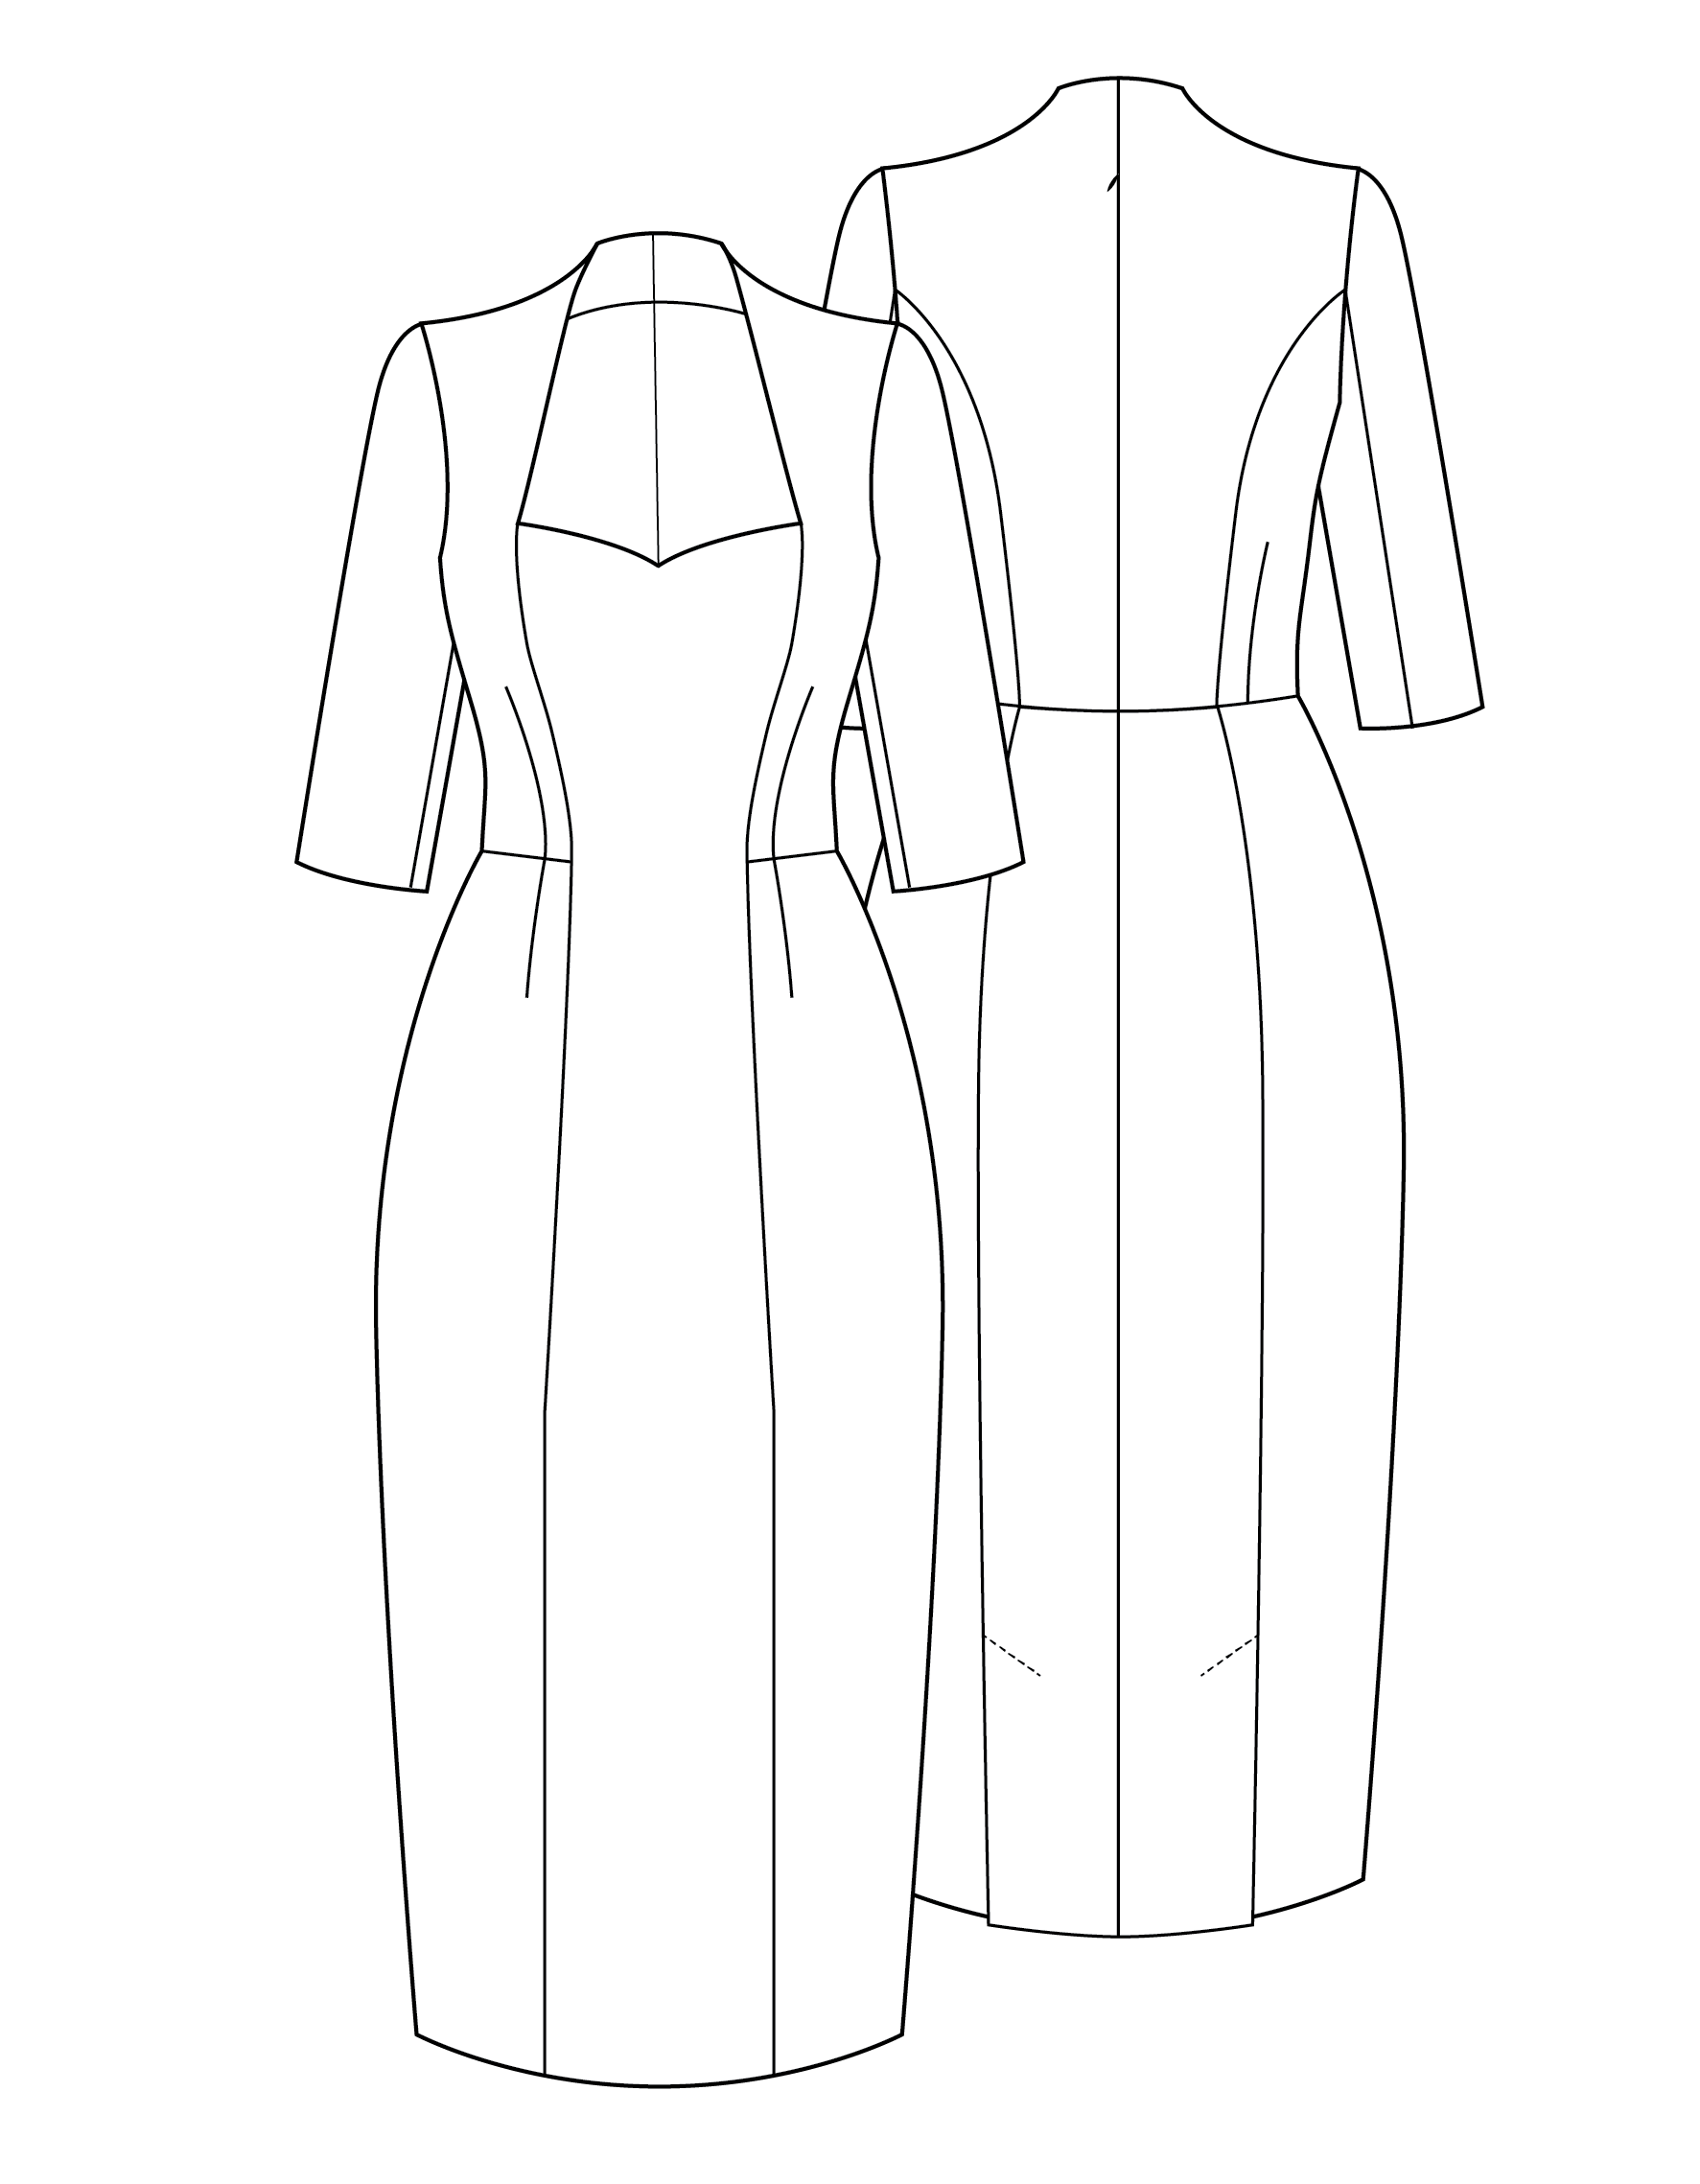 No. 23 Marrakesh dress - PDF sewing pattern — How to do Fashion